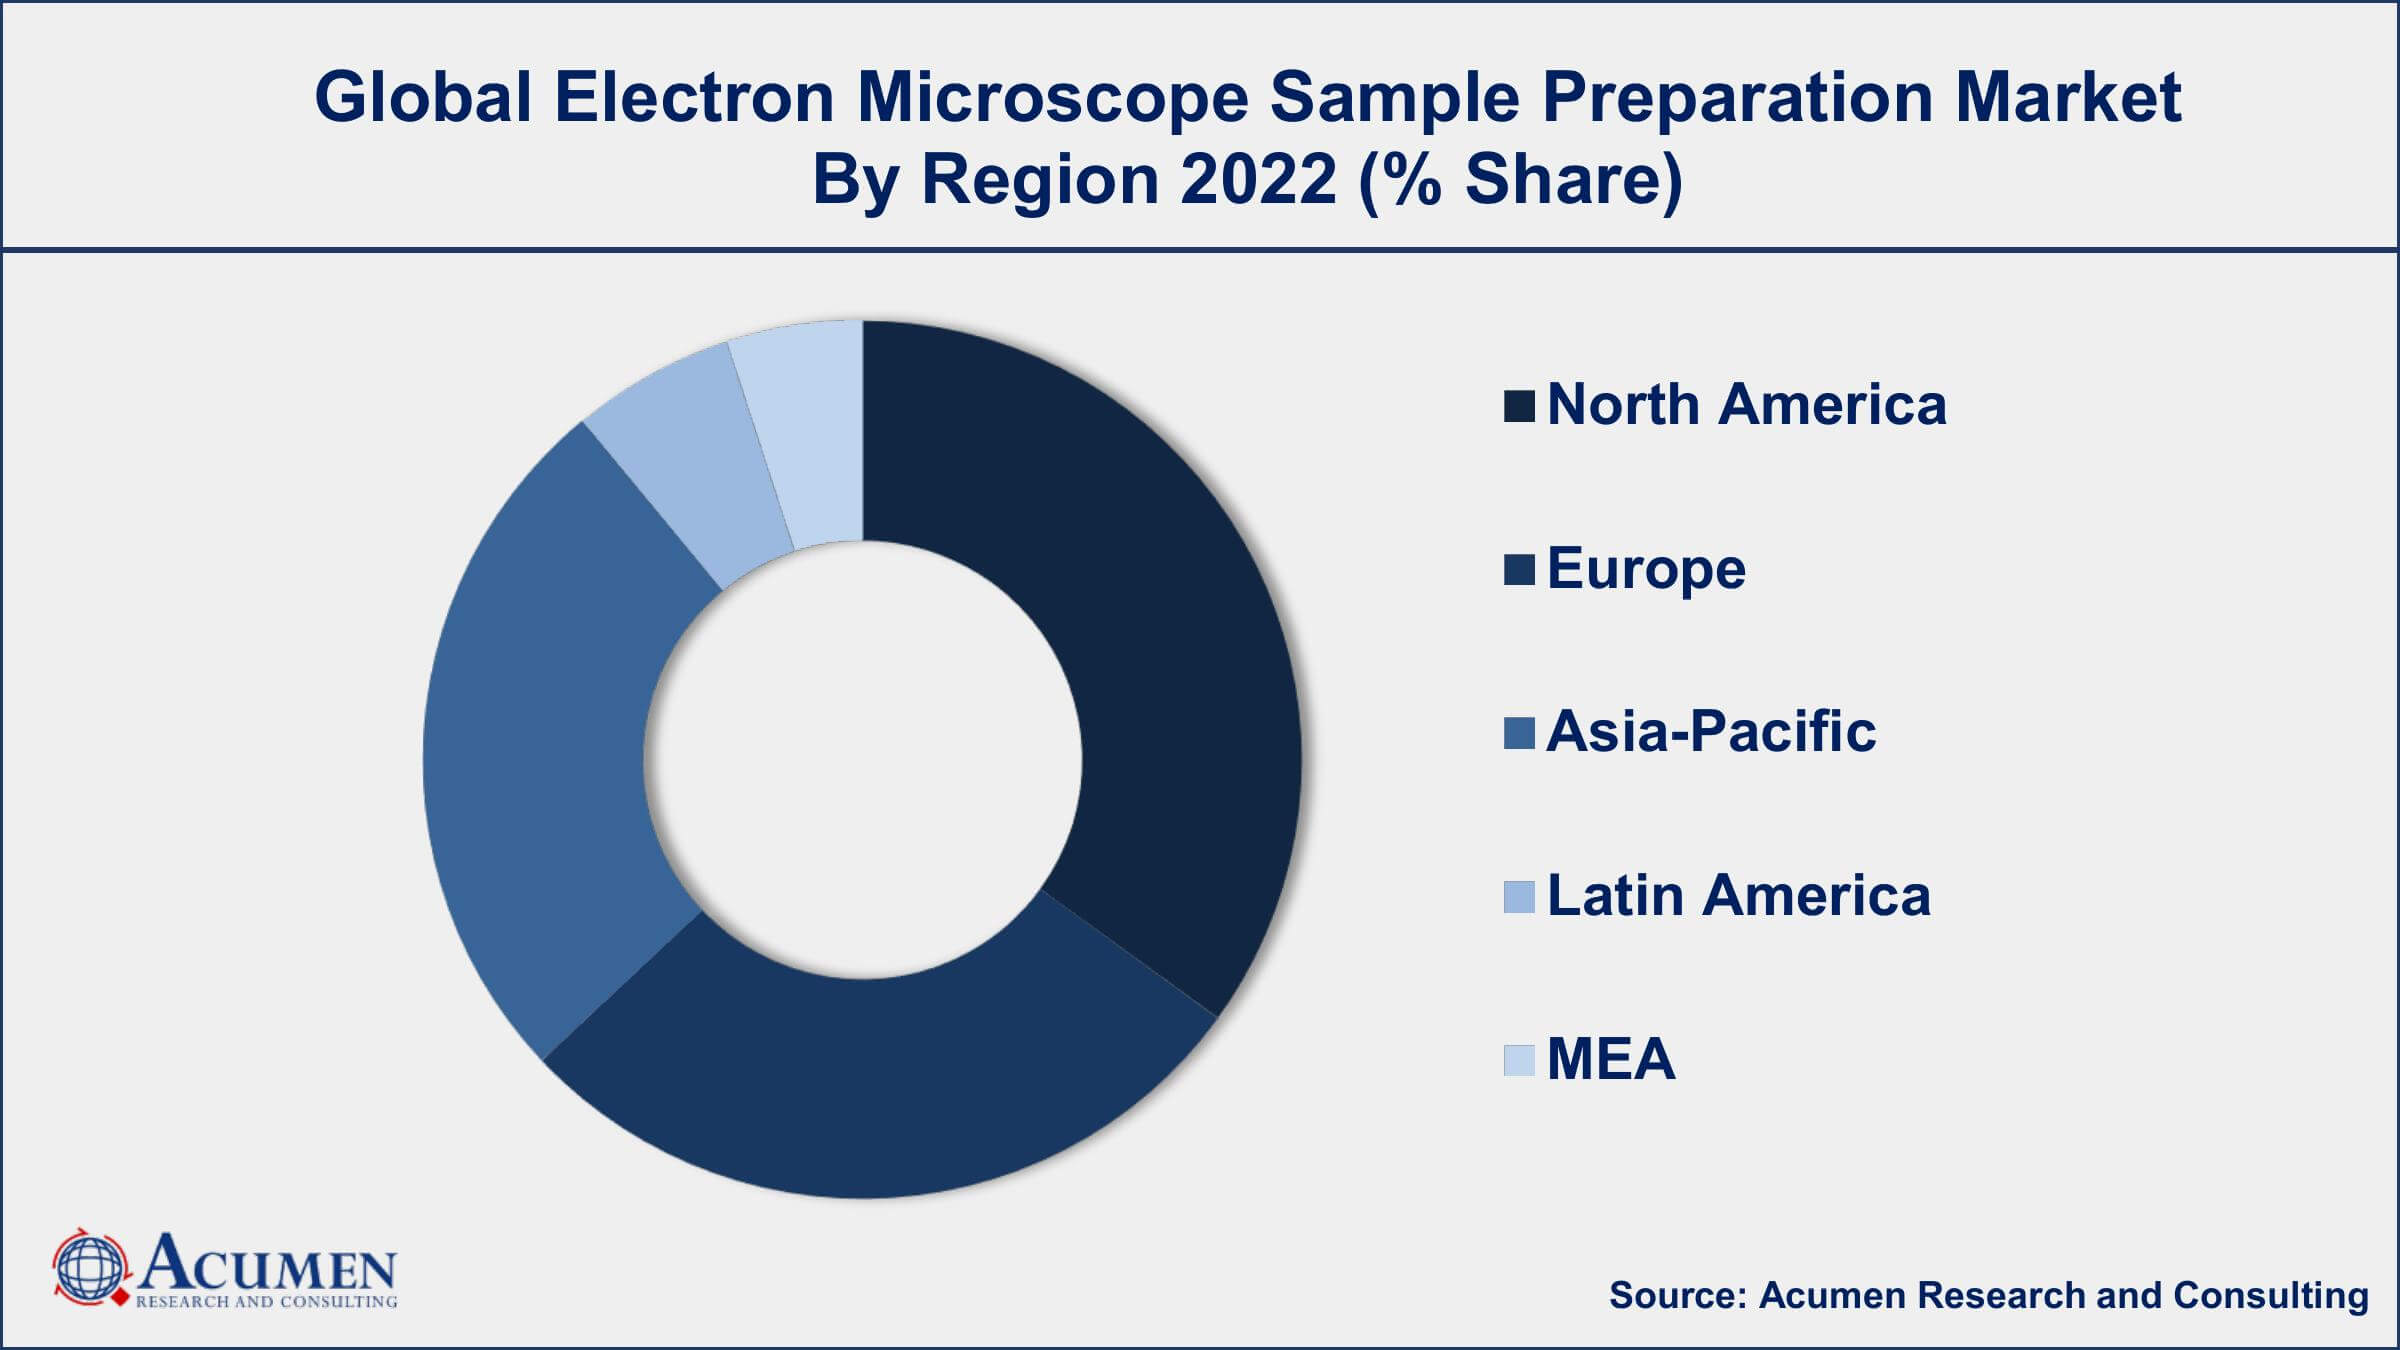 Electron Microscope Sample Preparation Market Drivers